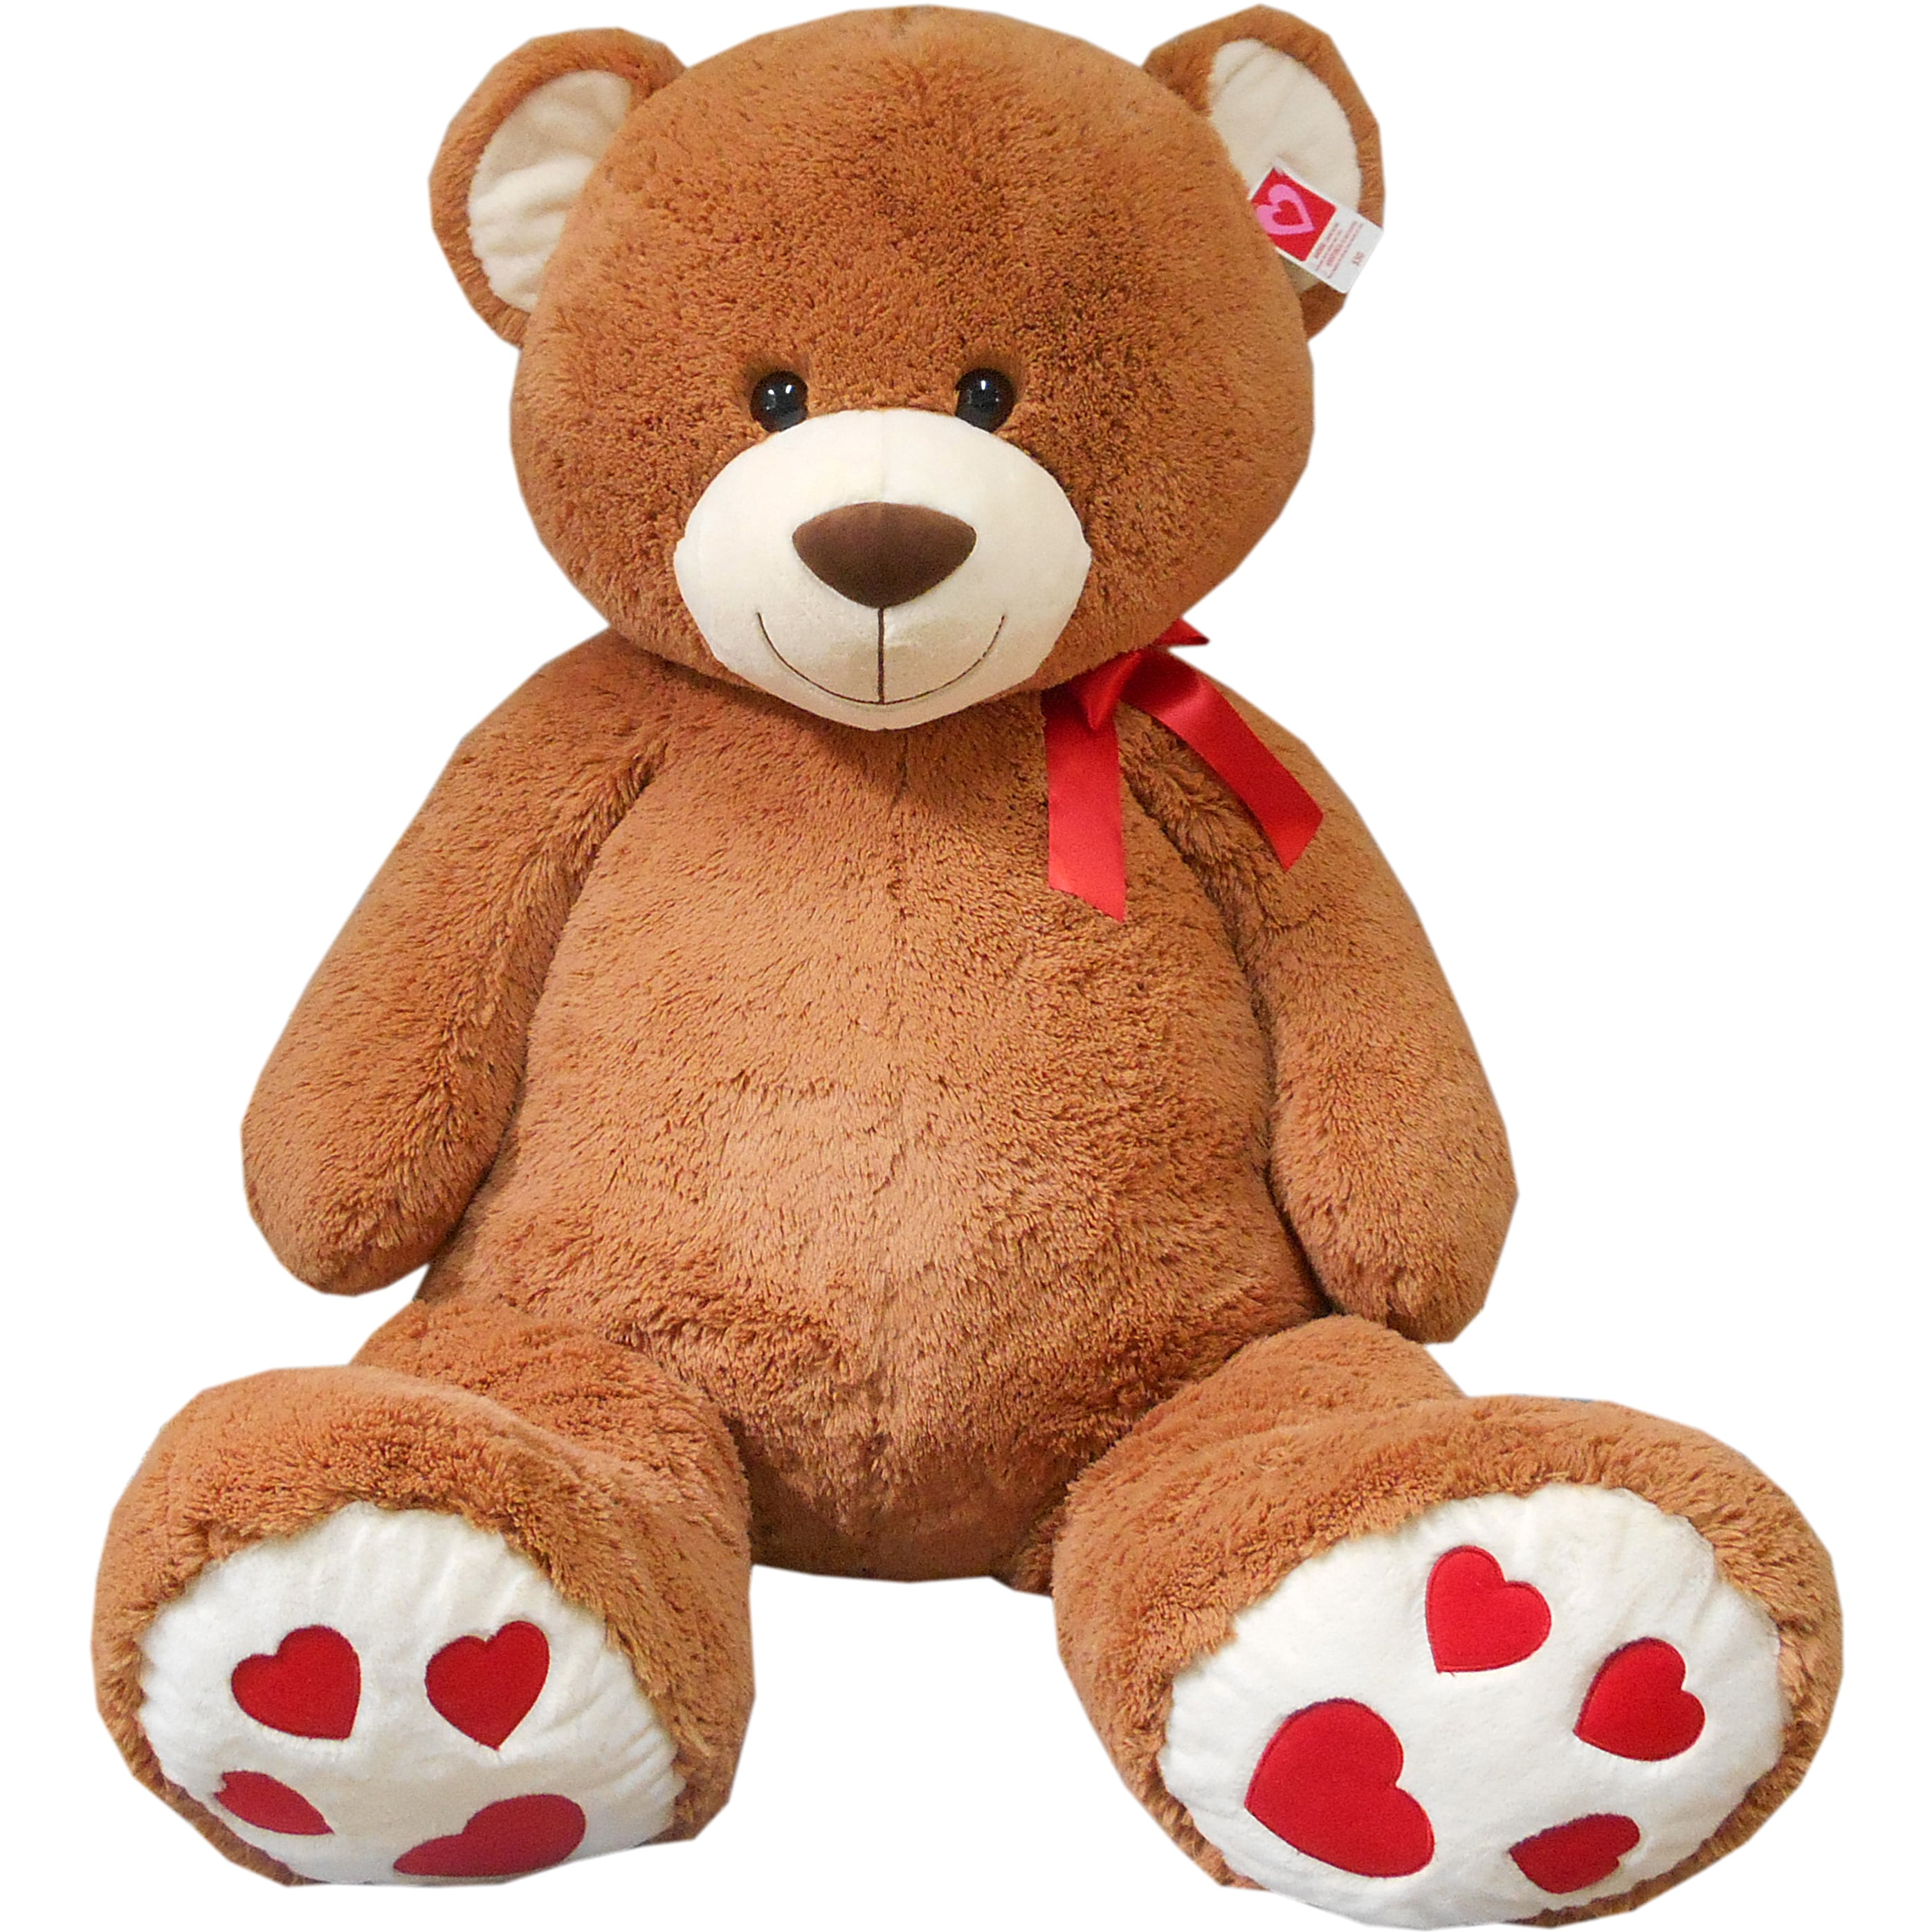 32'' Giant big light brown teddy bear plush soft bears toys doll Only Cover C292 